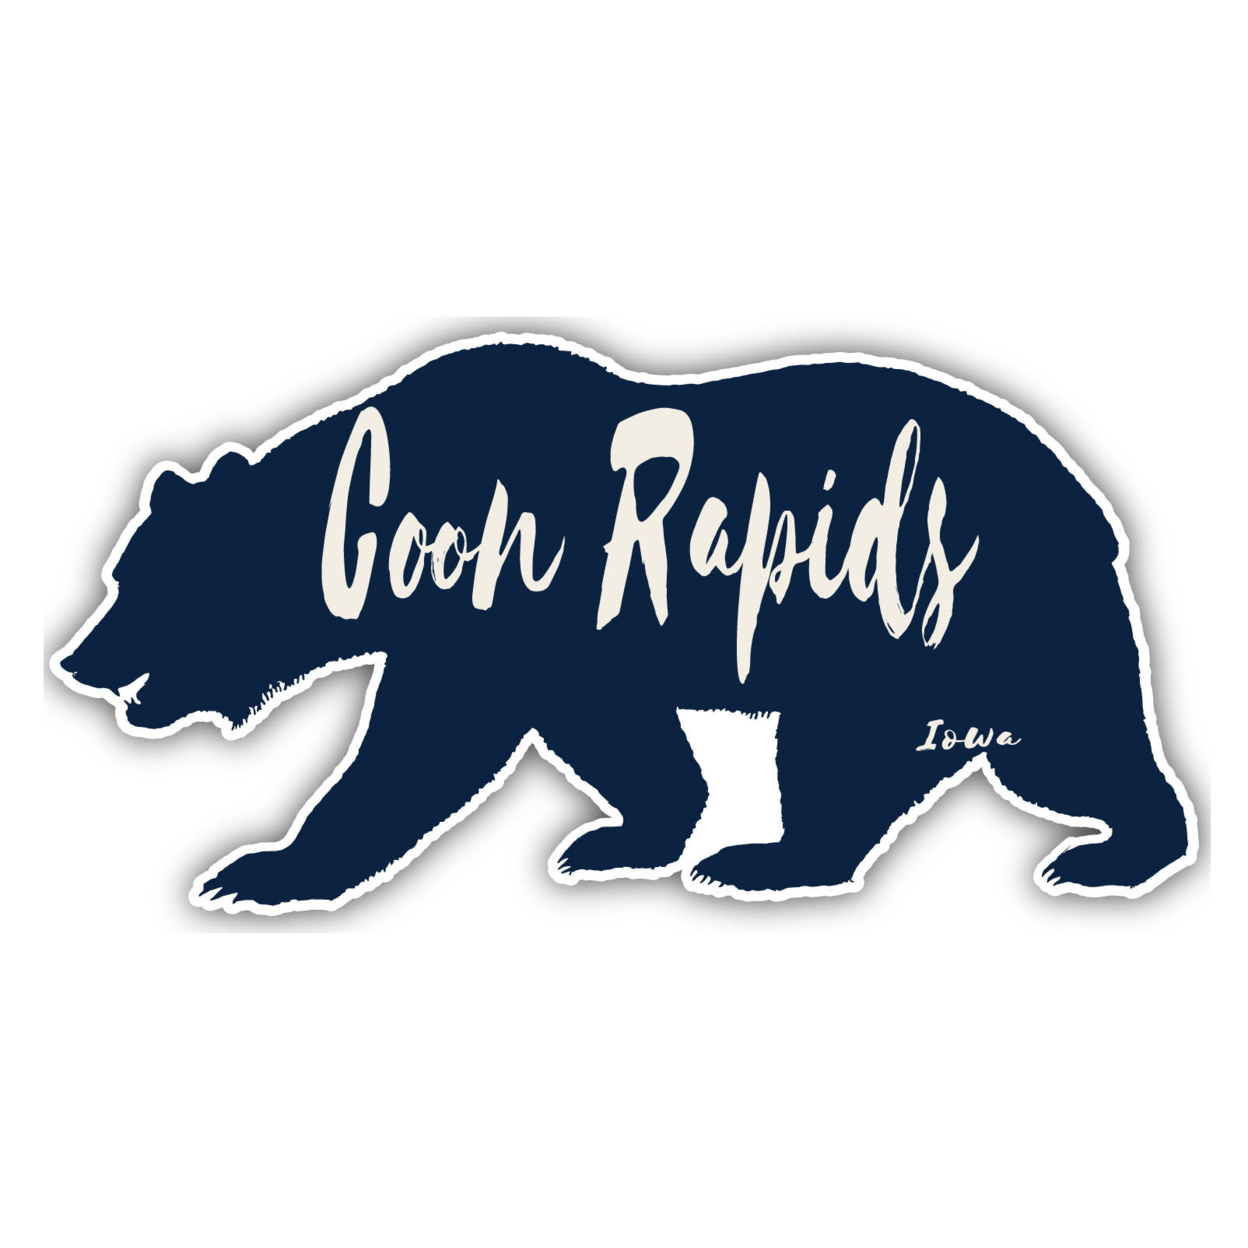 Coon Rapids Iowa Souvenir Decorative Stickers (Choose Theme And Size) - Single Unit, 12-Inch, Bear